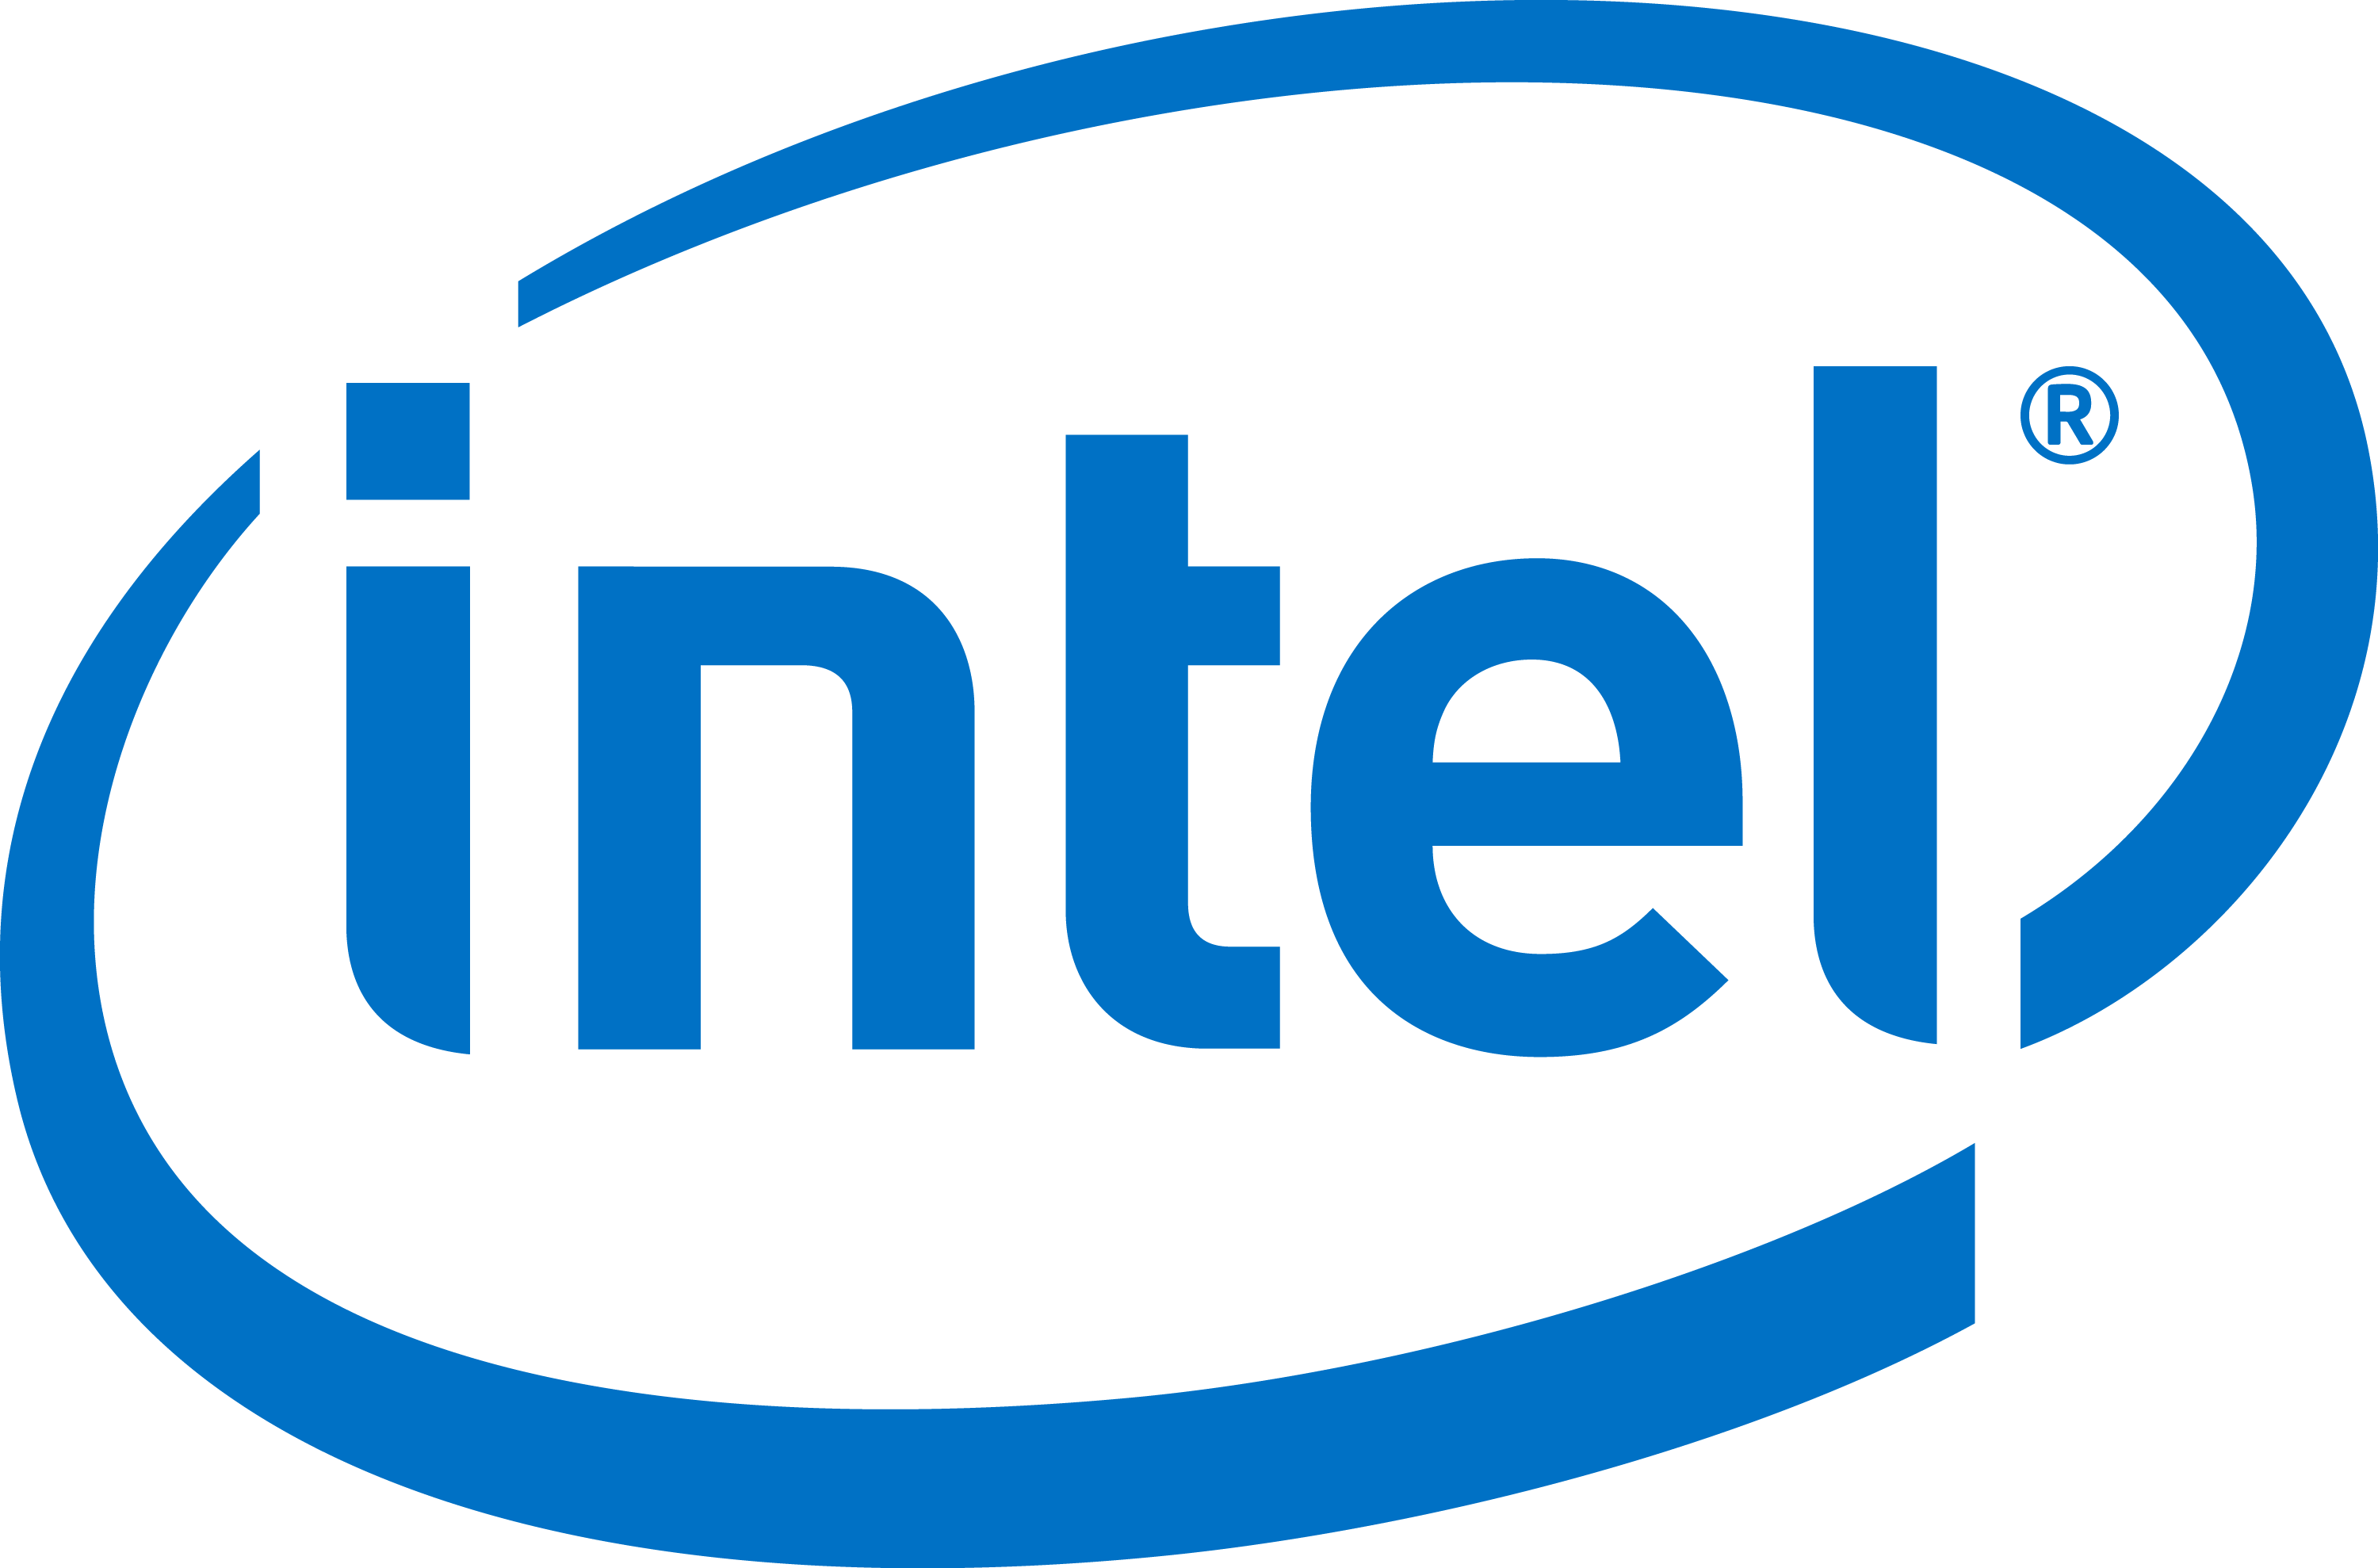 Intel, www.intel.com